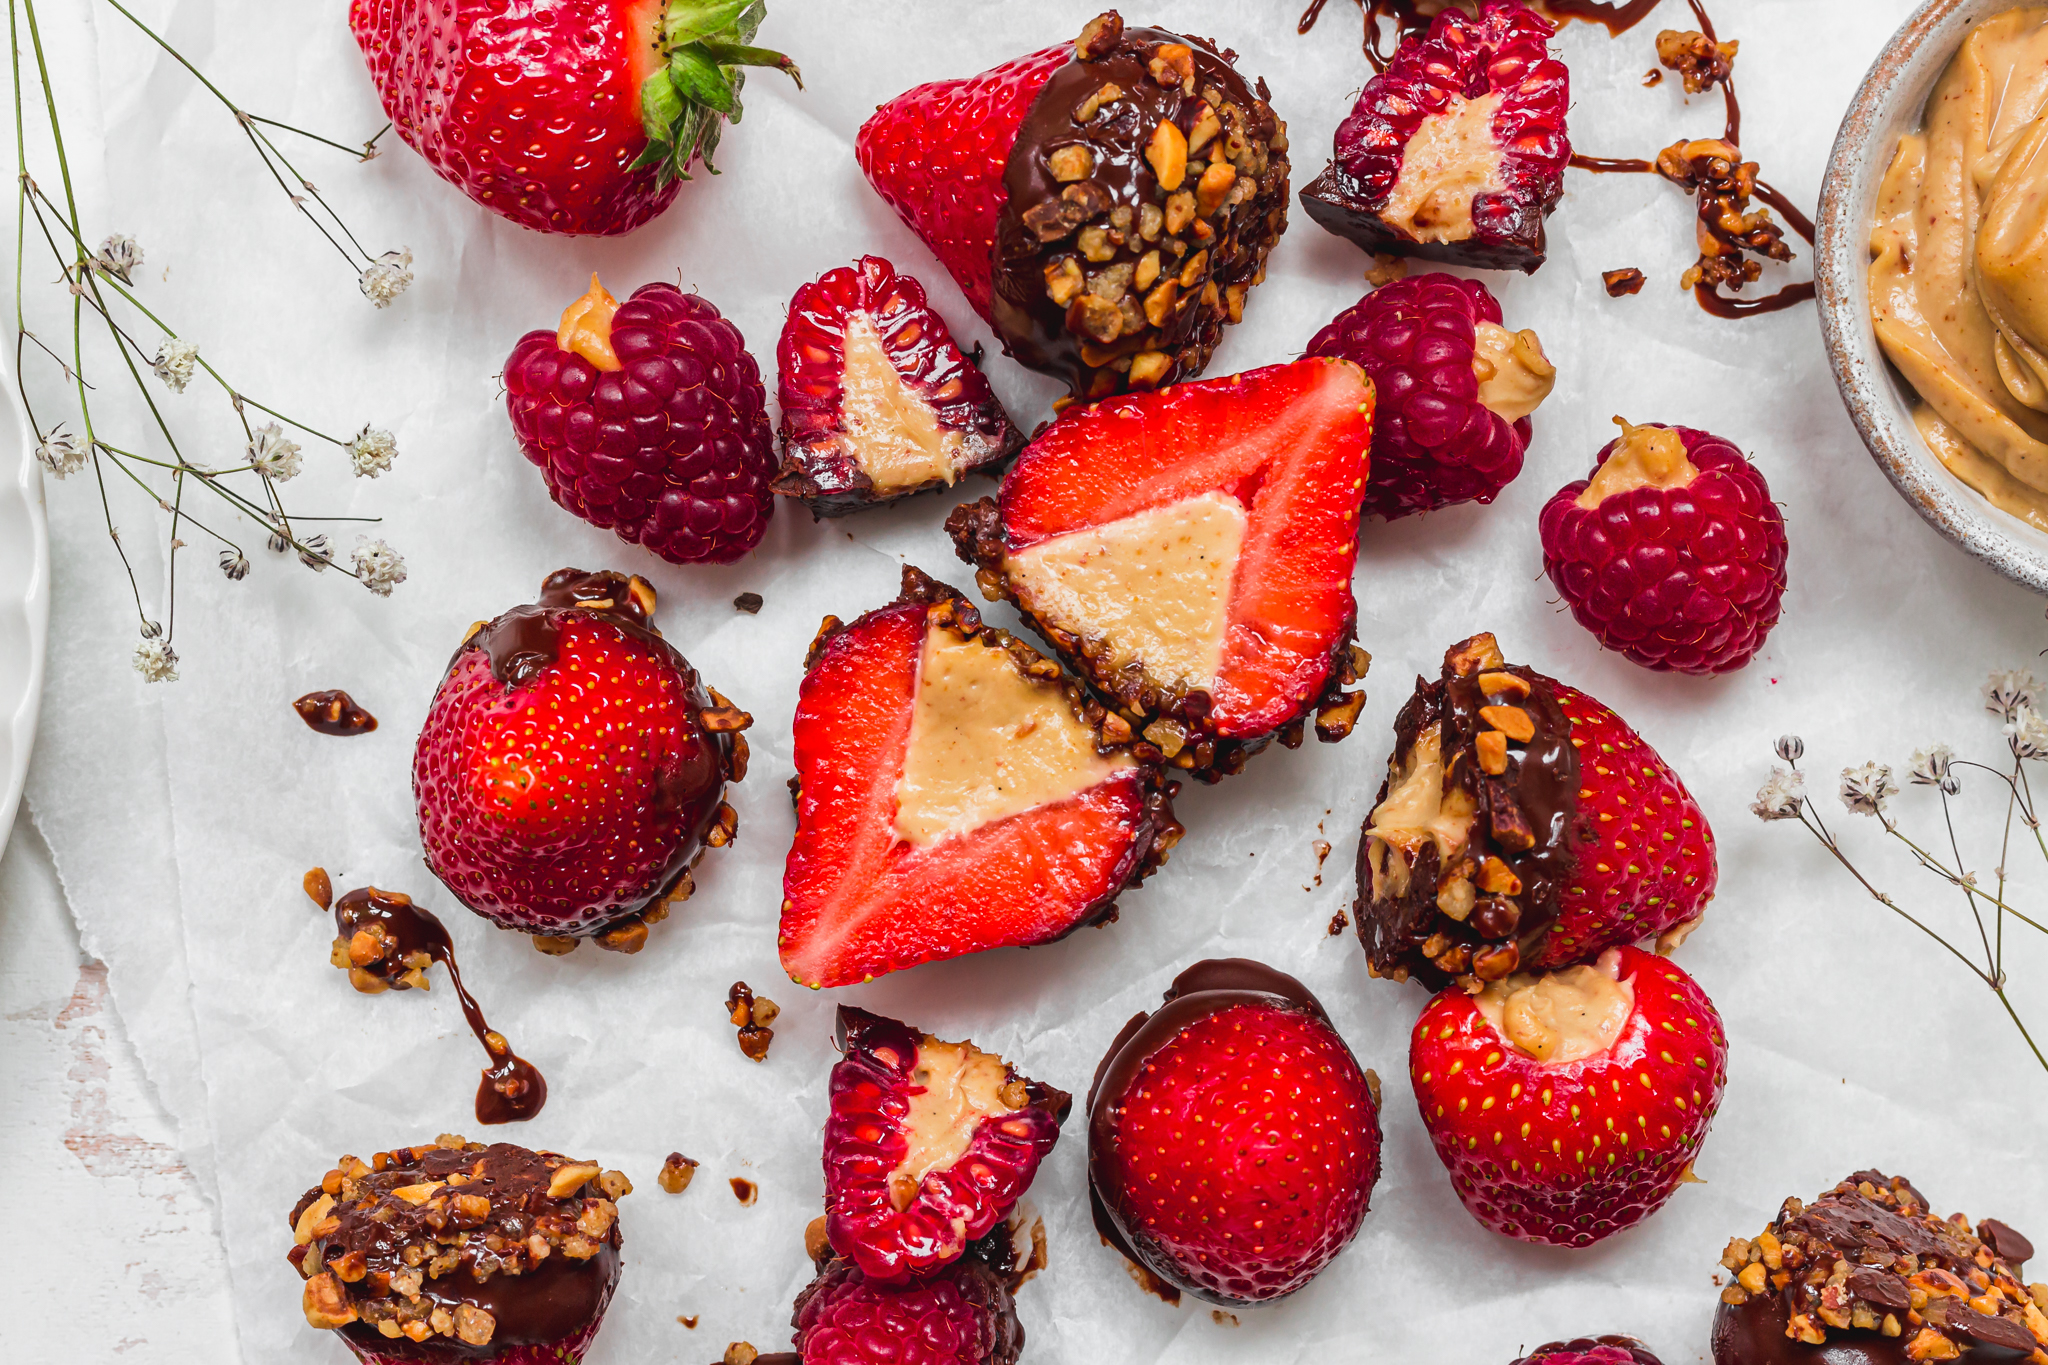 Landscape photo of Cheesecake Stuffed Strawberries and Raspberries